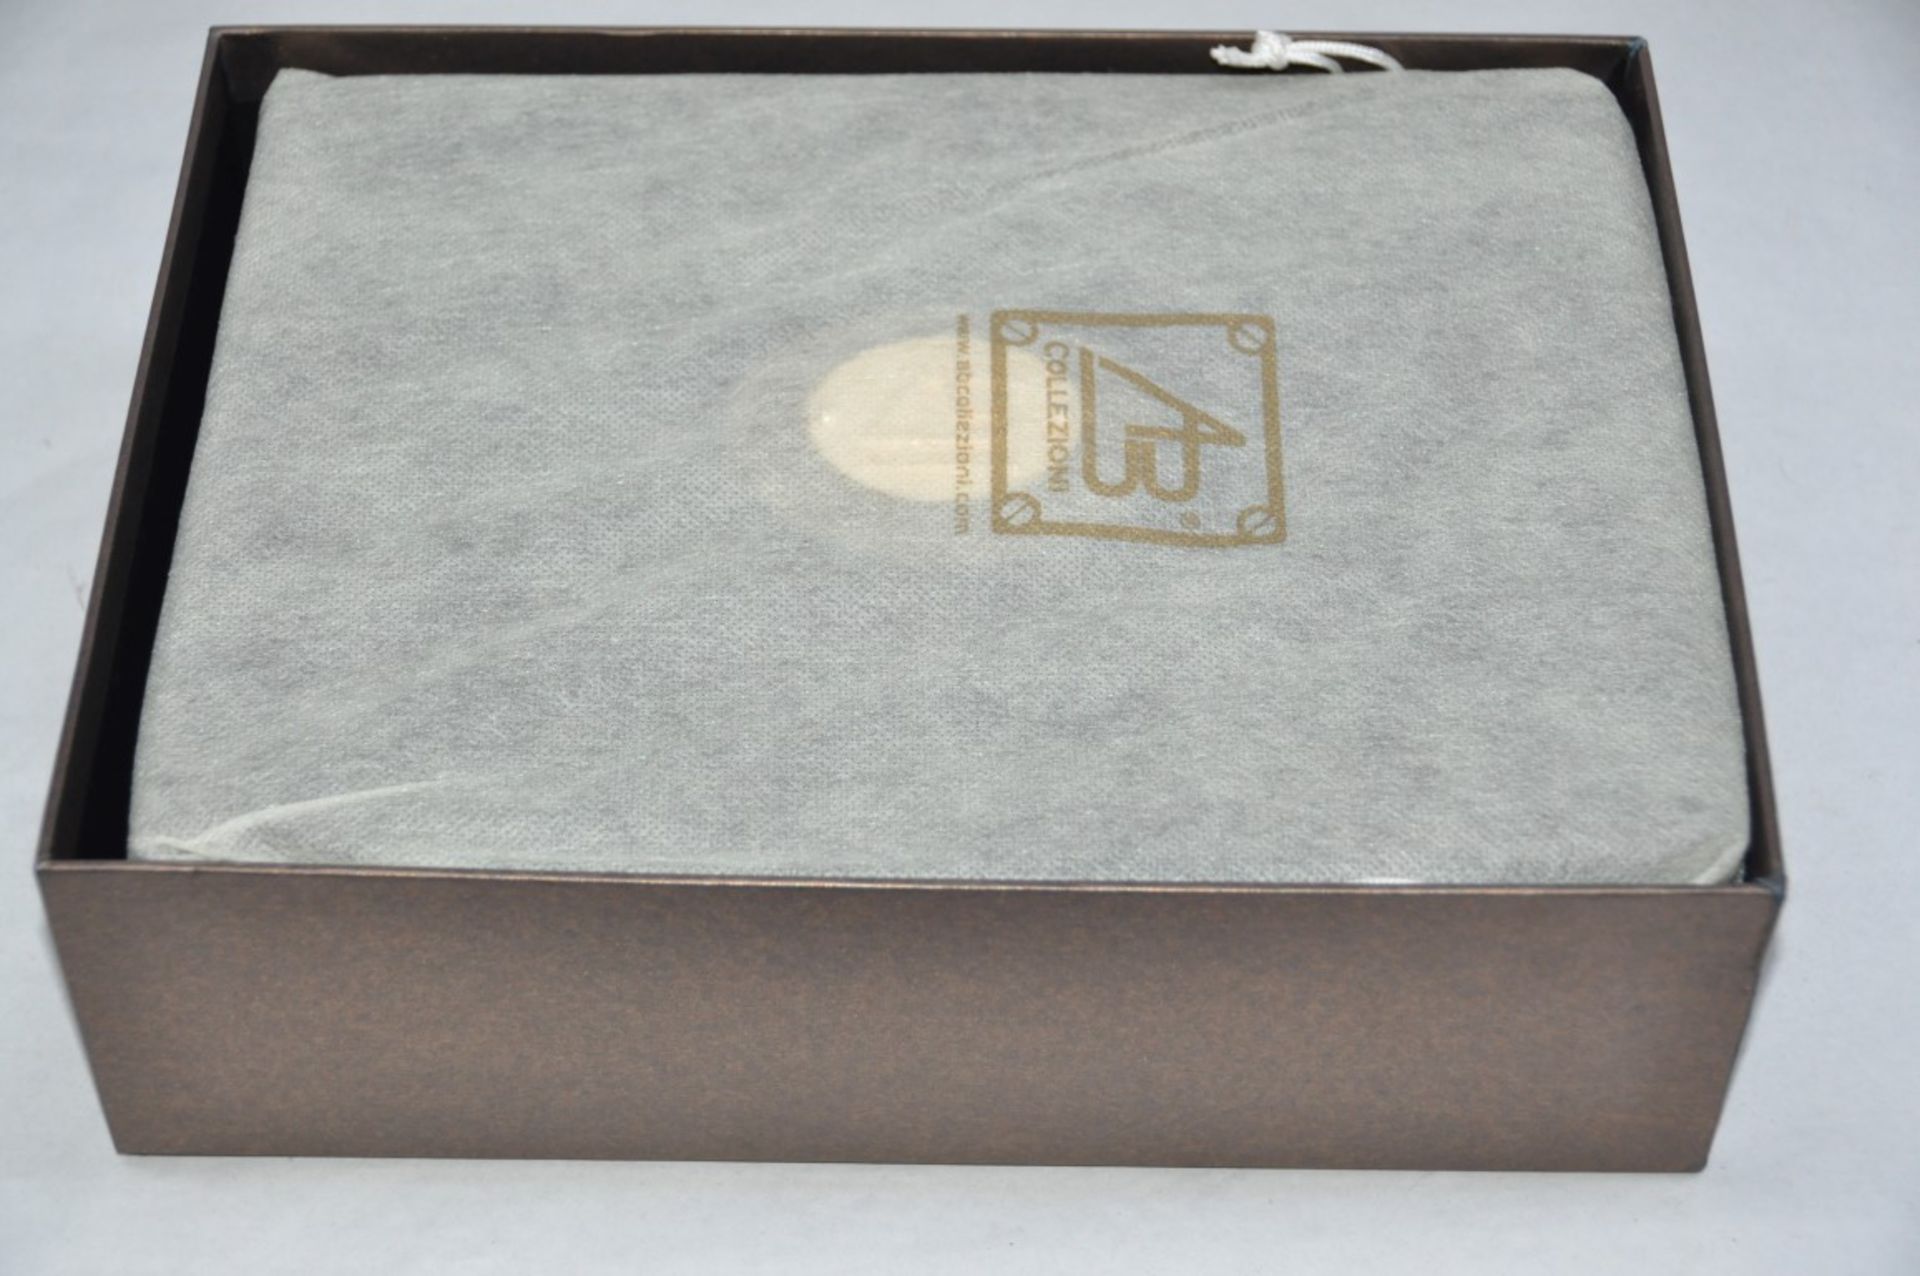 1 x "AB Collezioni" Italian Genuine Leather-Bound Luxury POKER SET (34048) - Ref LT003  - Features - Image 8 of 8